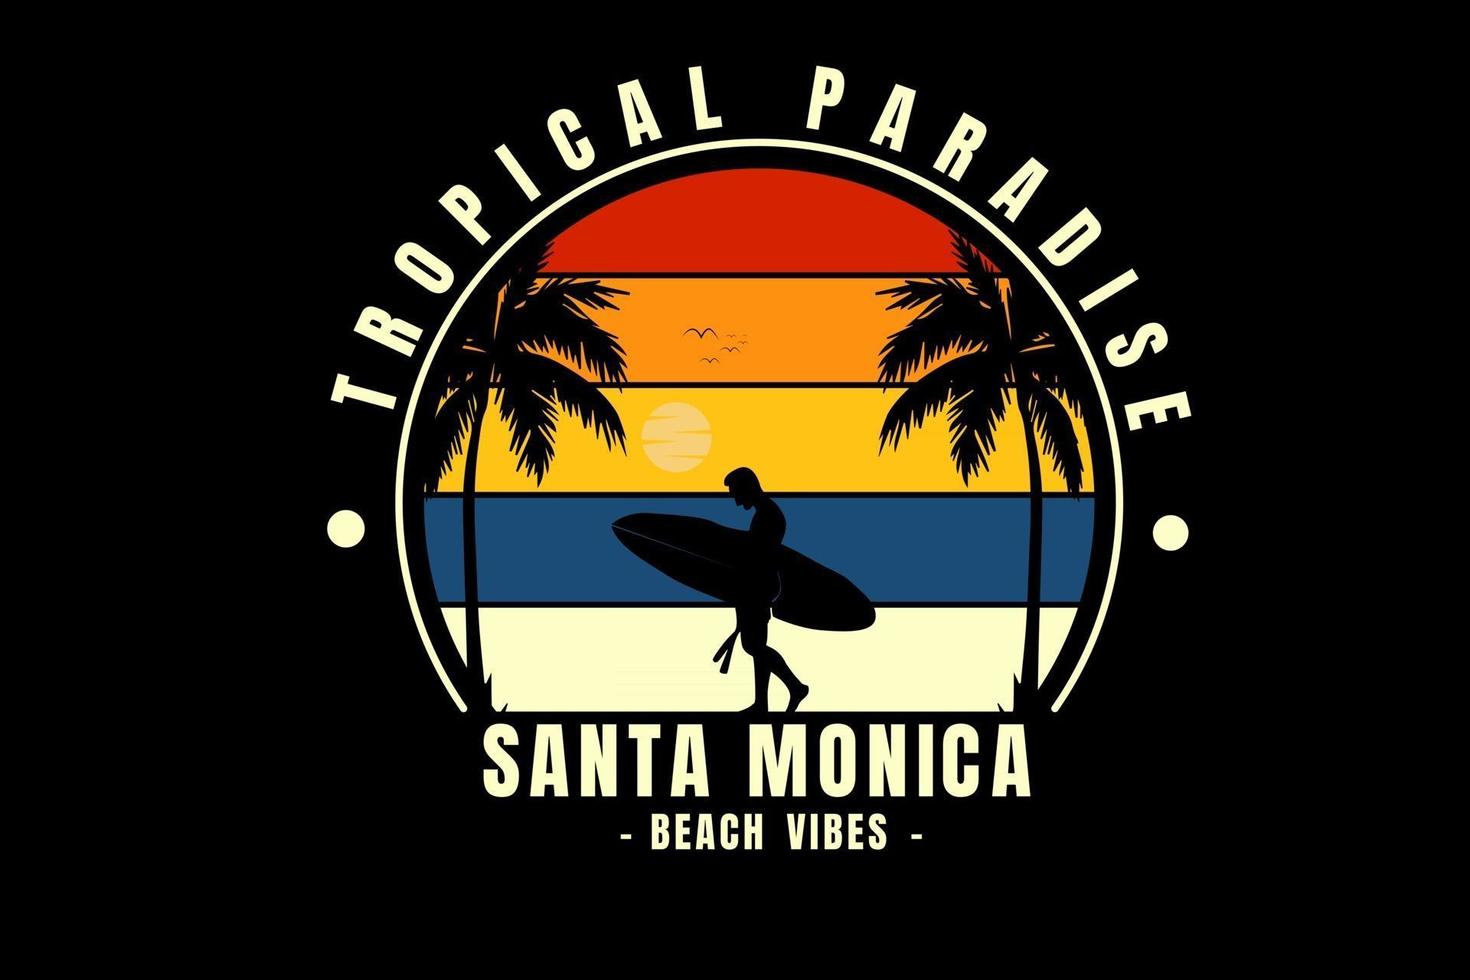 tropisches paradies santa monica beach vibes montana farbe rot orange gelb und blau vektor